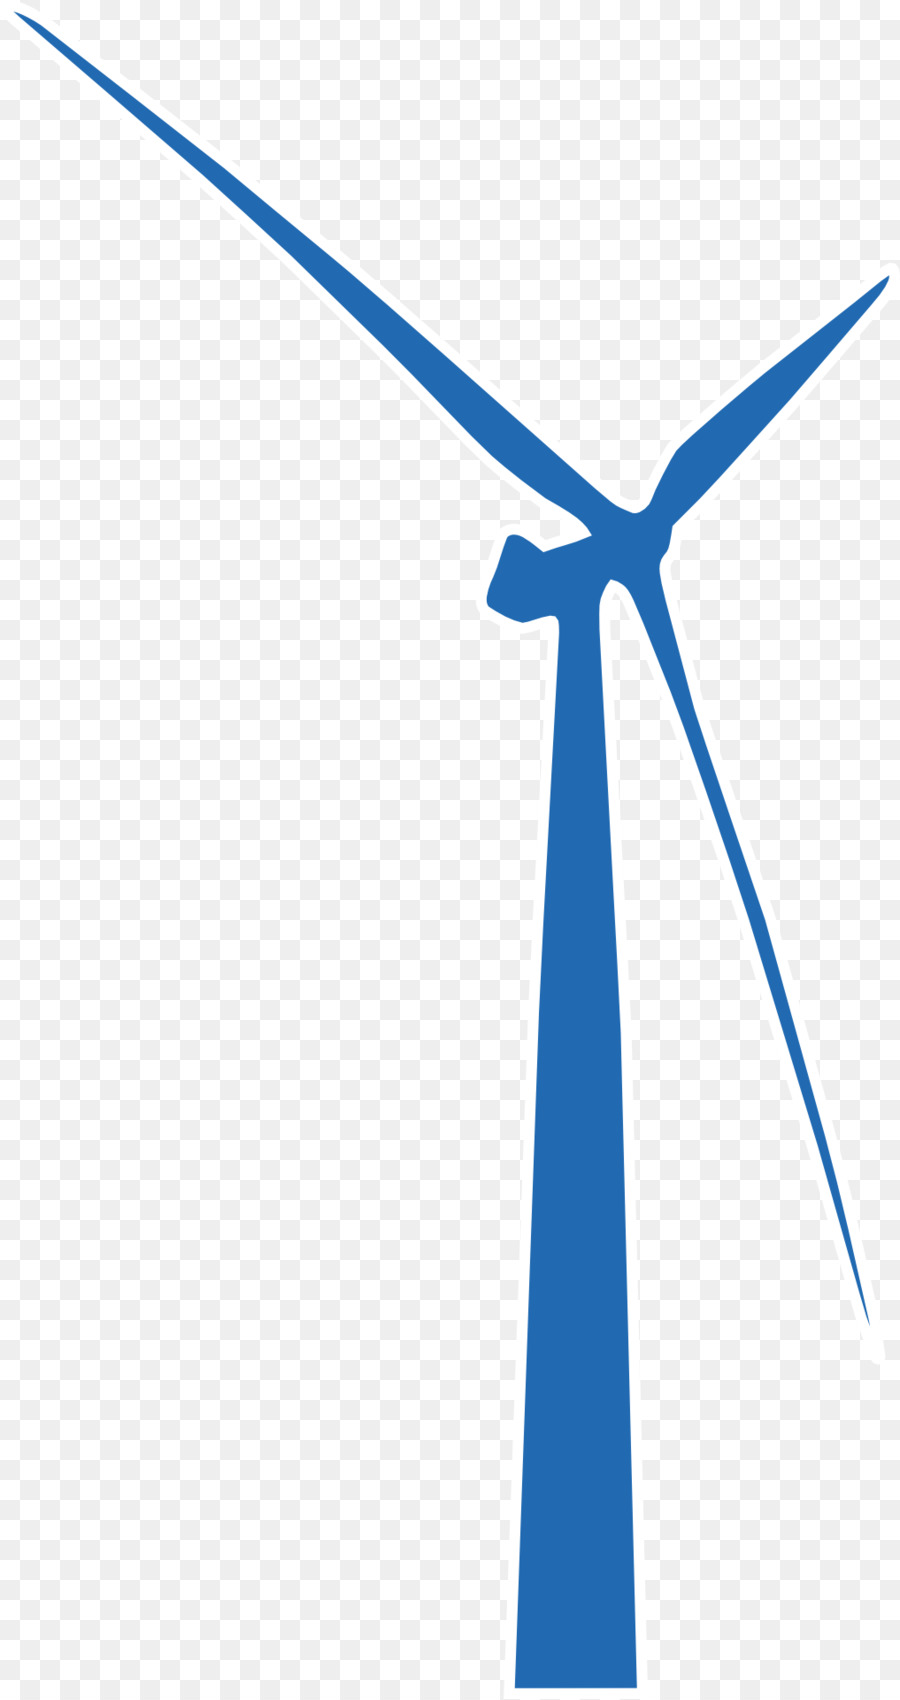 Wind turbine Windkraft generator - Wind